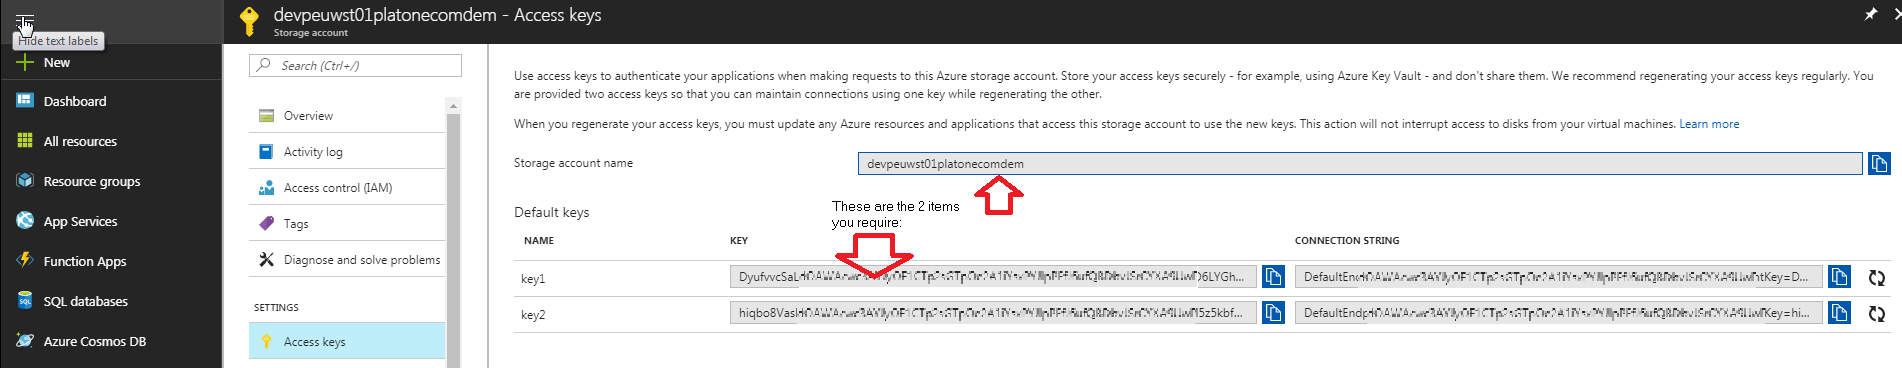 Azure Storage Portal Access Keys